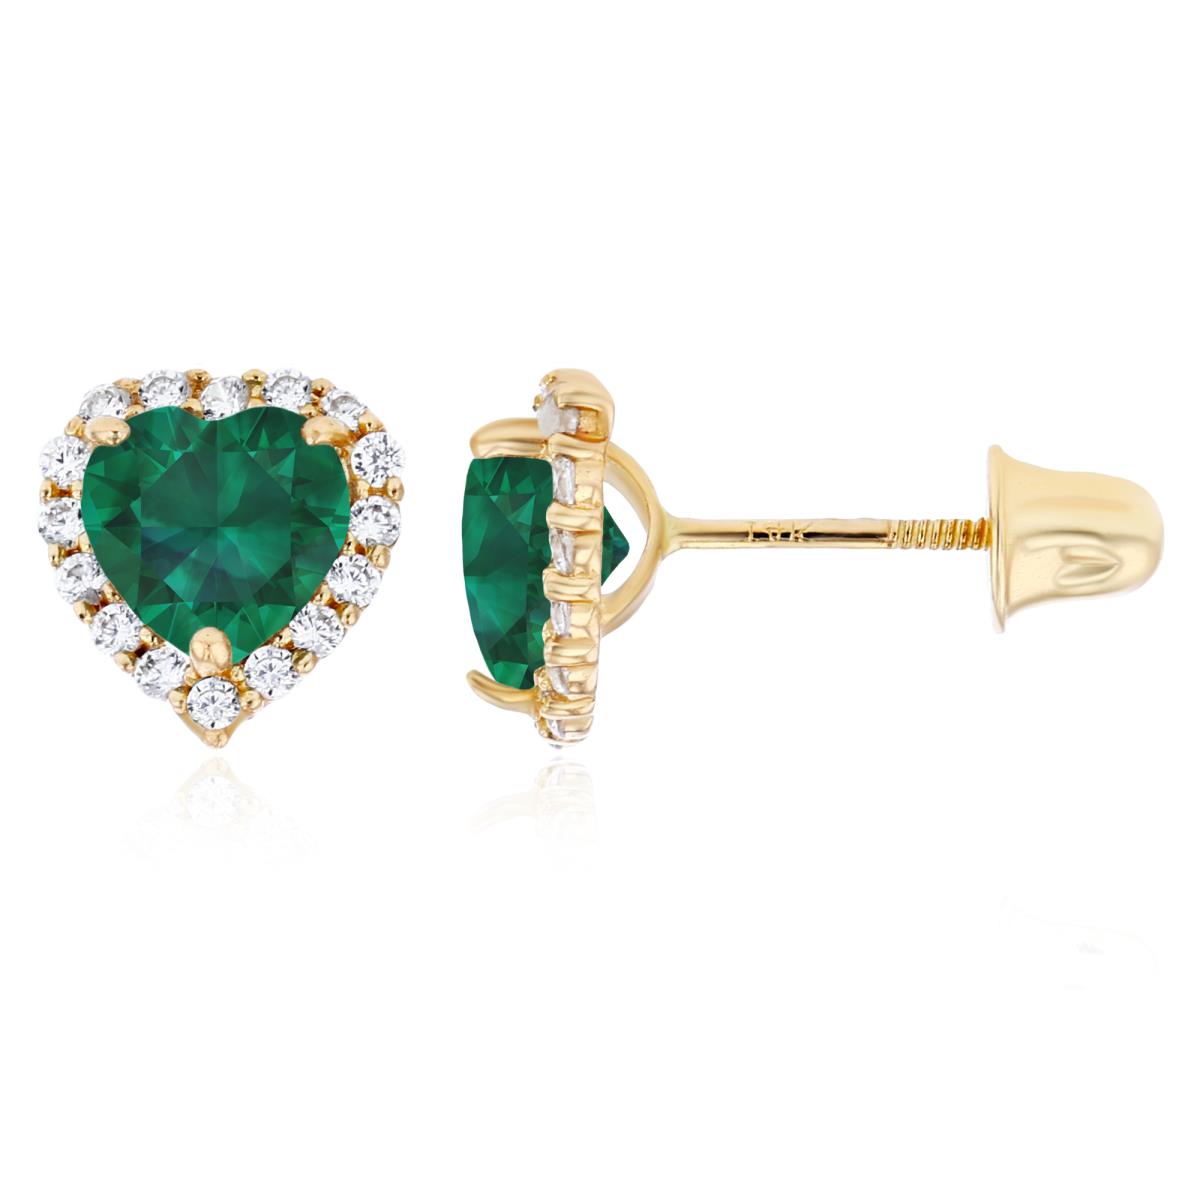 14K Yellow Gold 5mm Heart Created Emerald & 1mm Created White Sapphire Halo Screwback Earrings